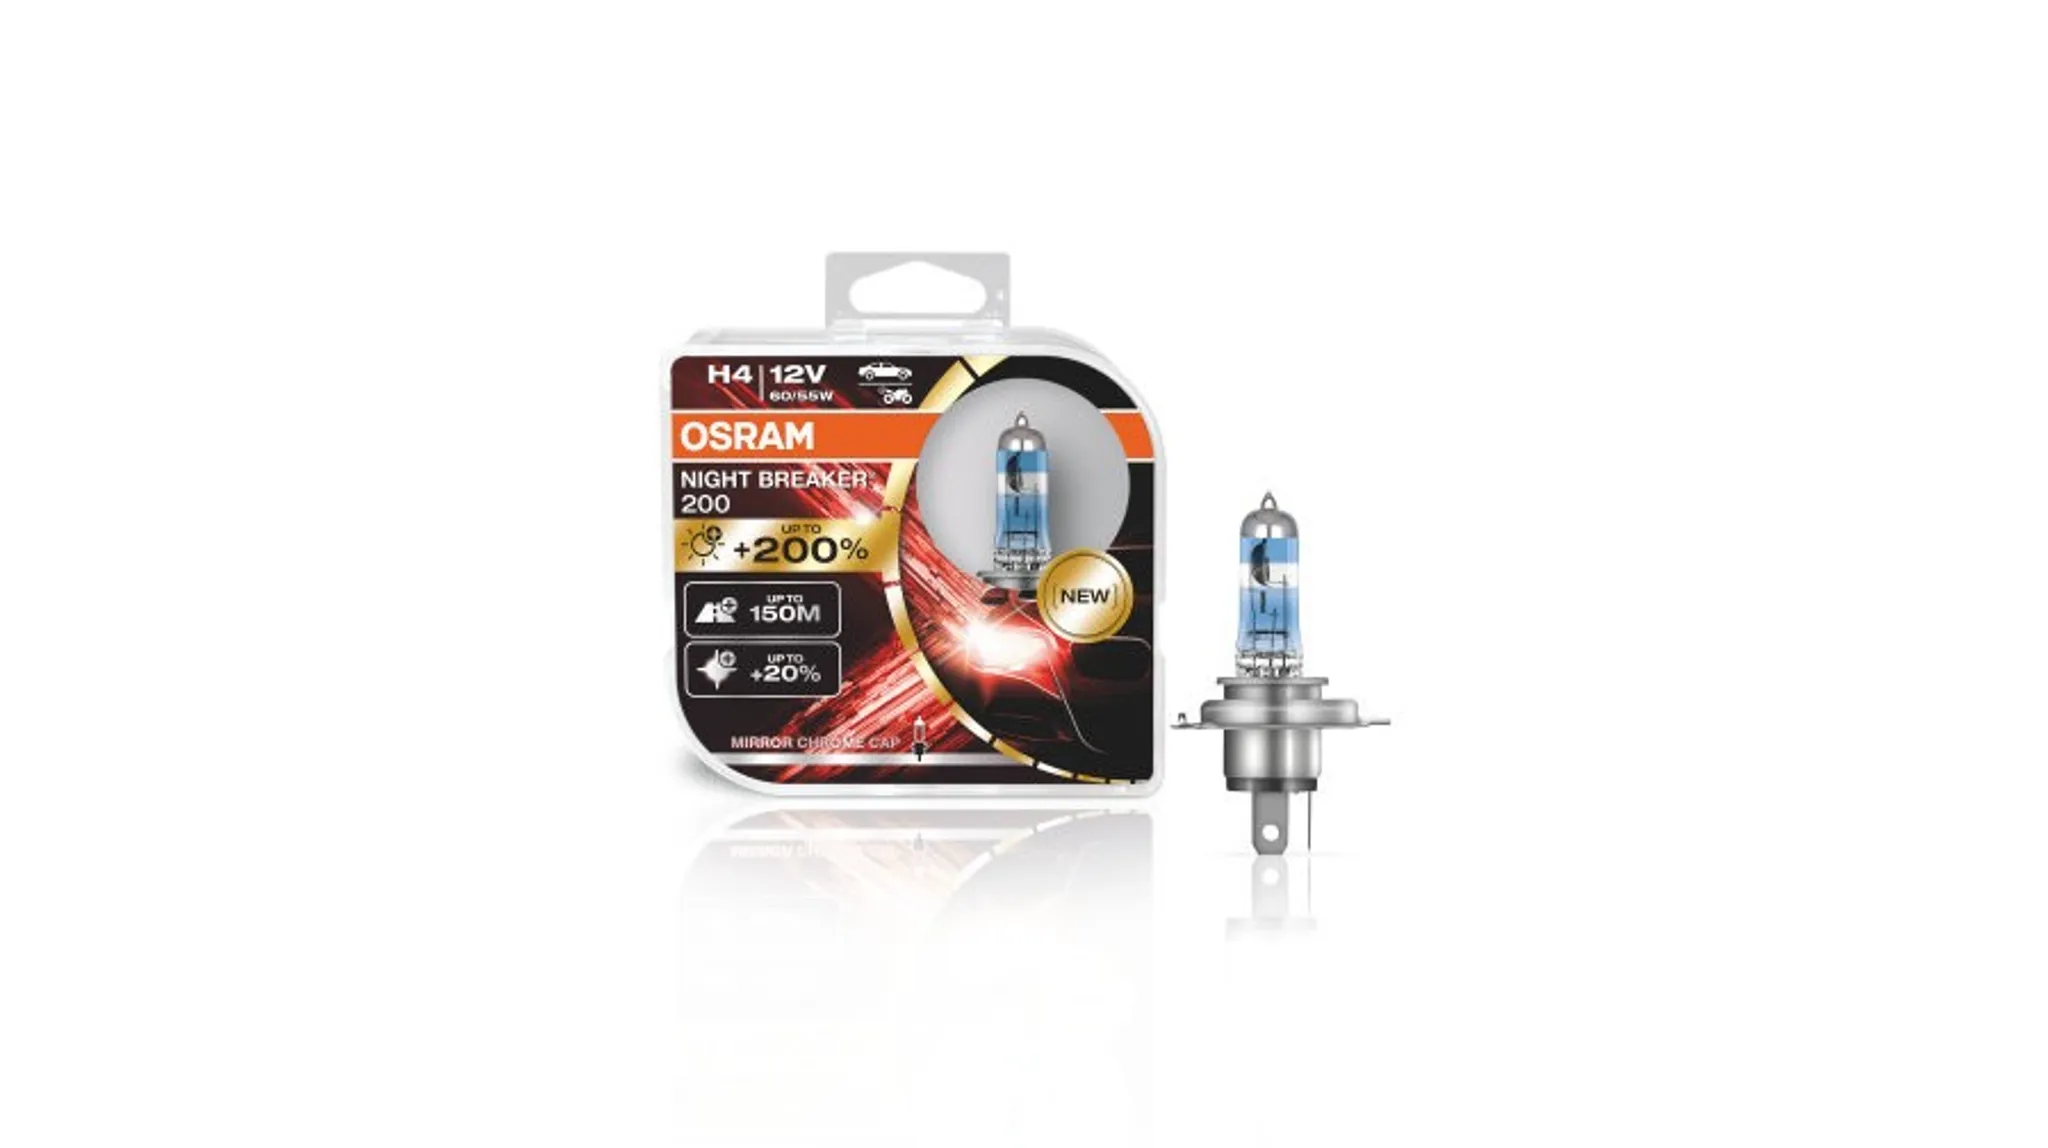 Osram Ultra Life H1 64150ULT-HCB Autolampen Duo Box, 9,29 €